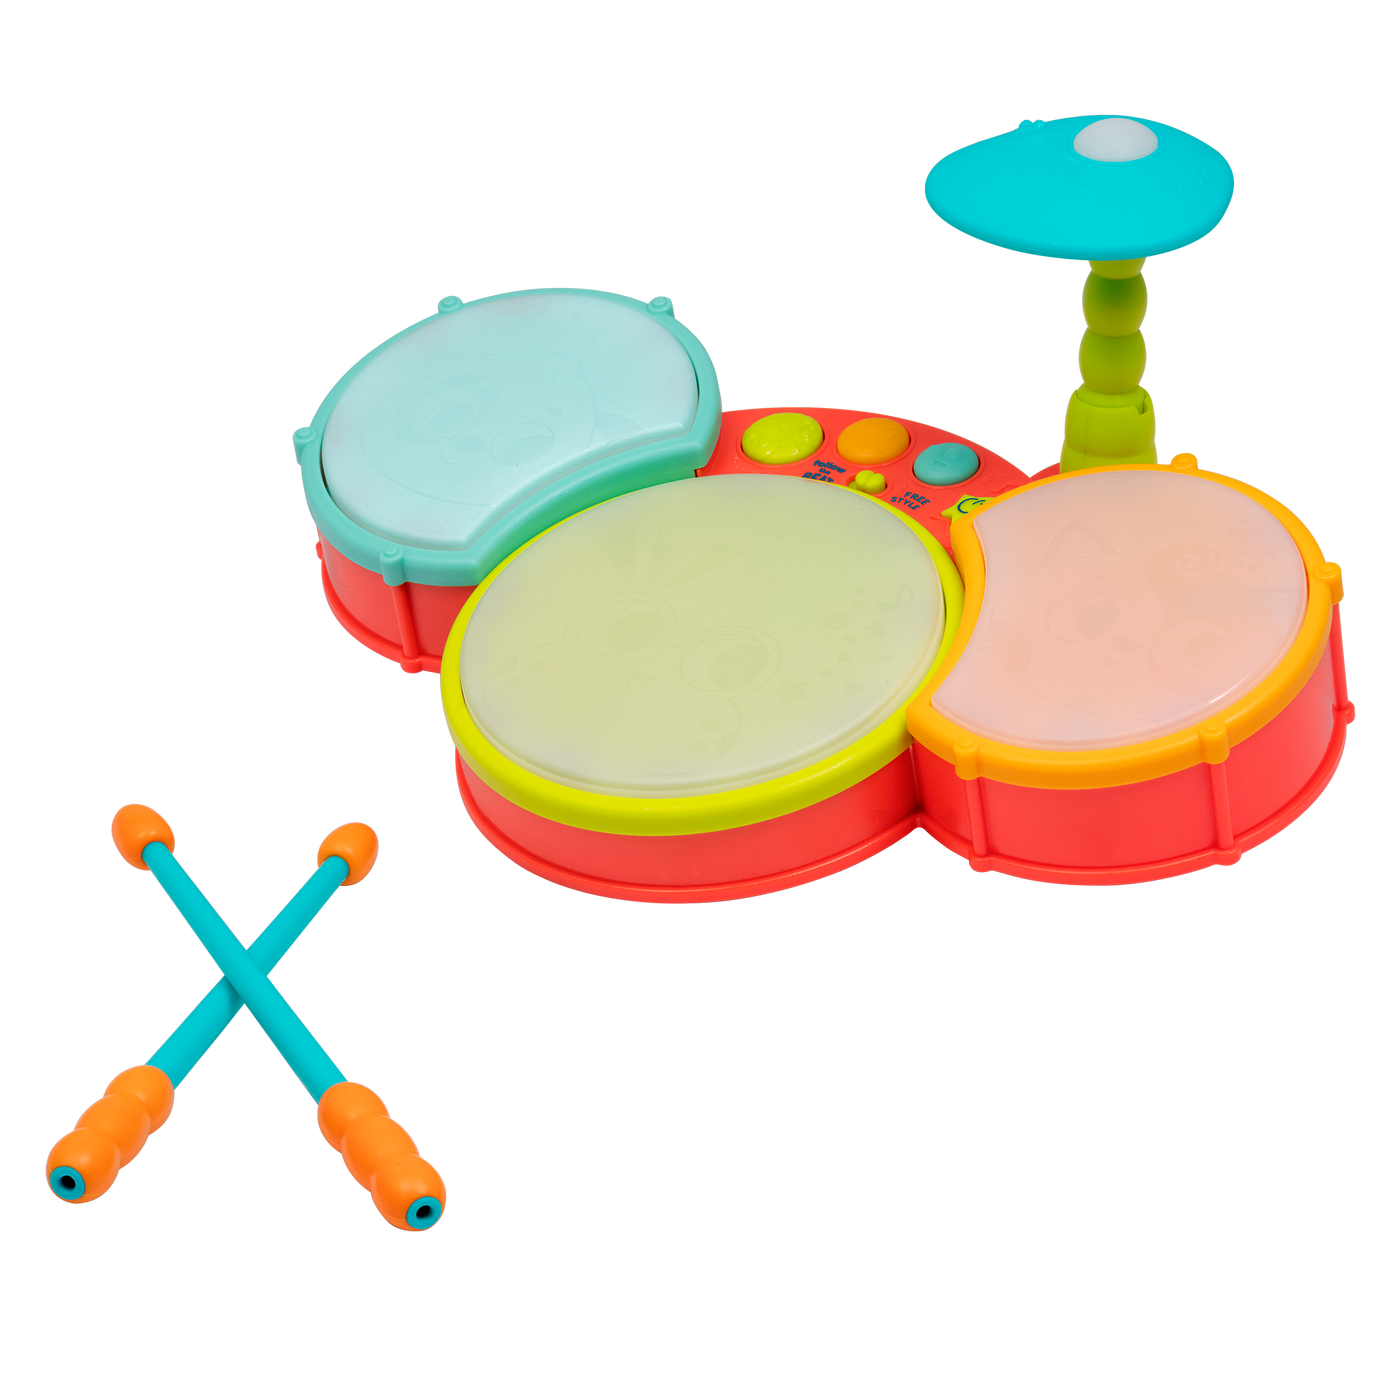 Light-up toy drum set.